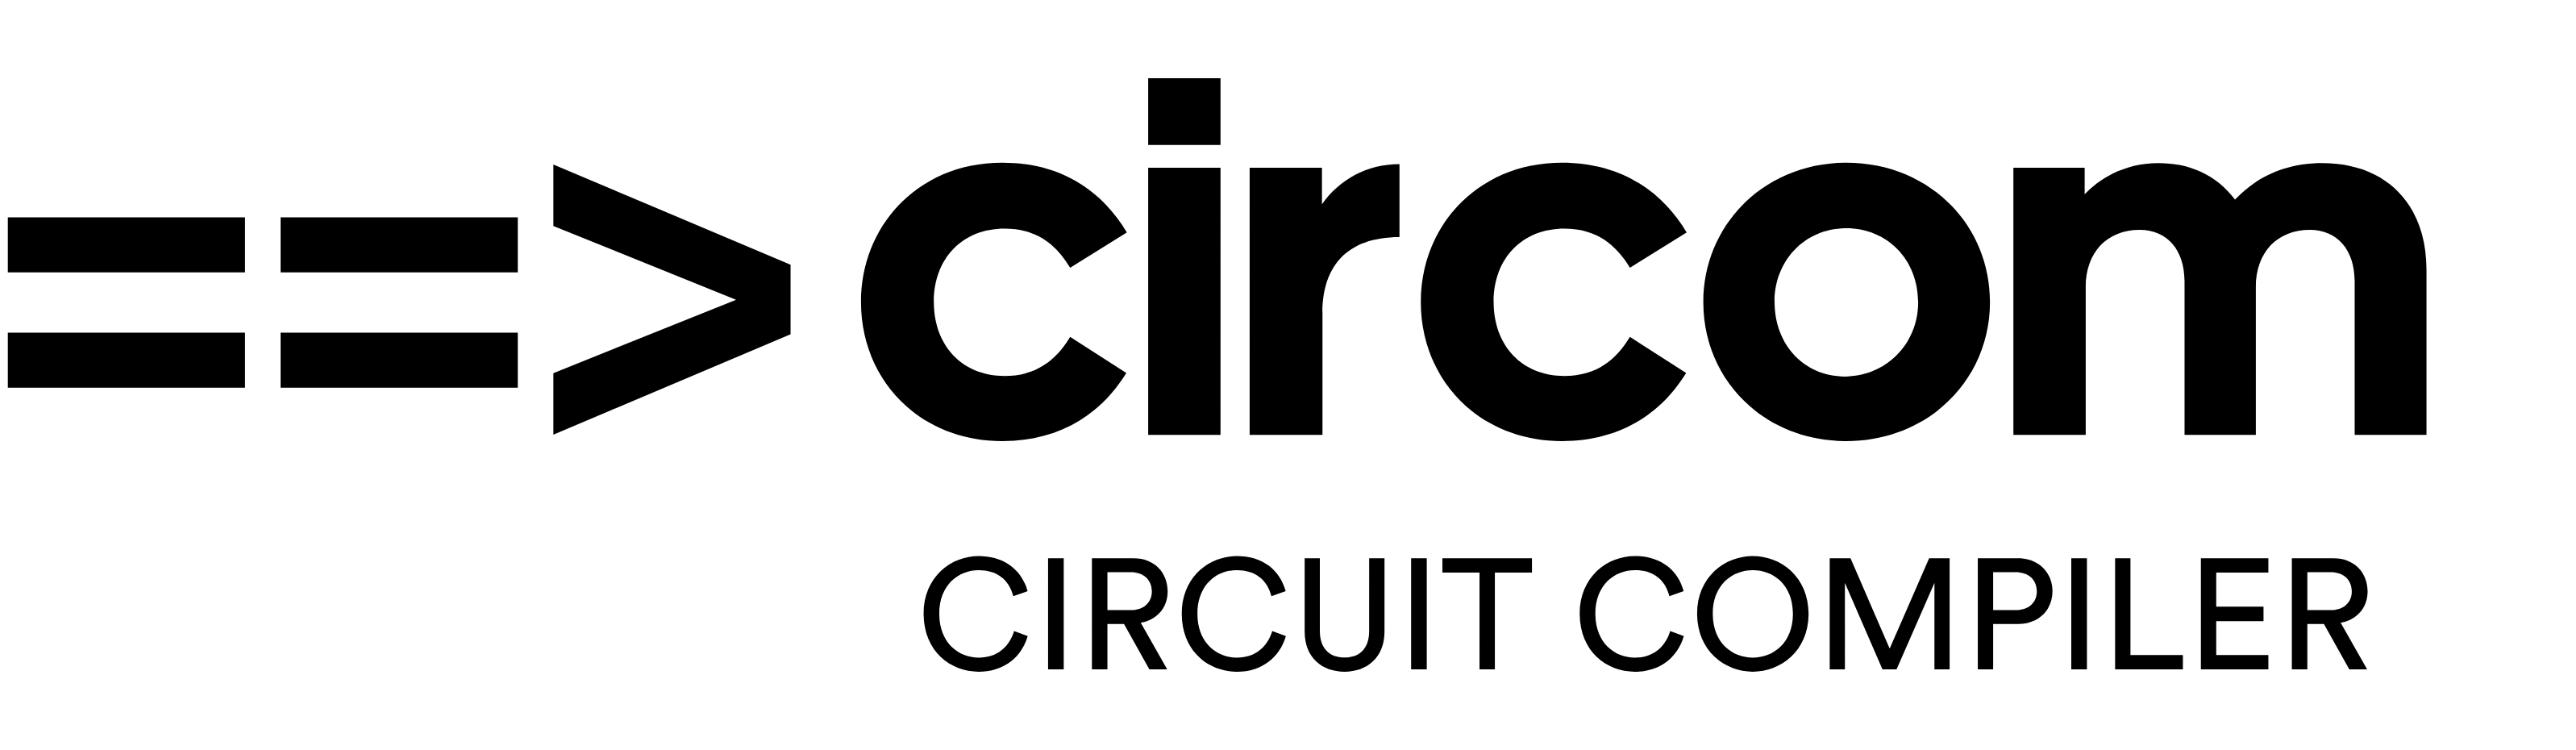 circom-logo-black.png